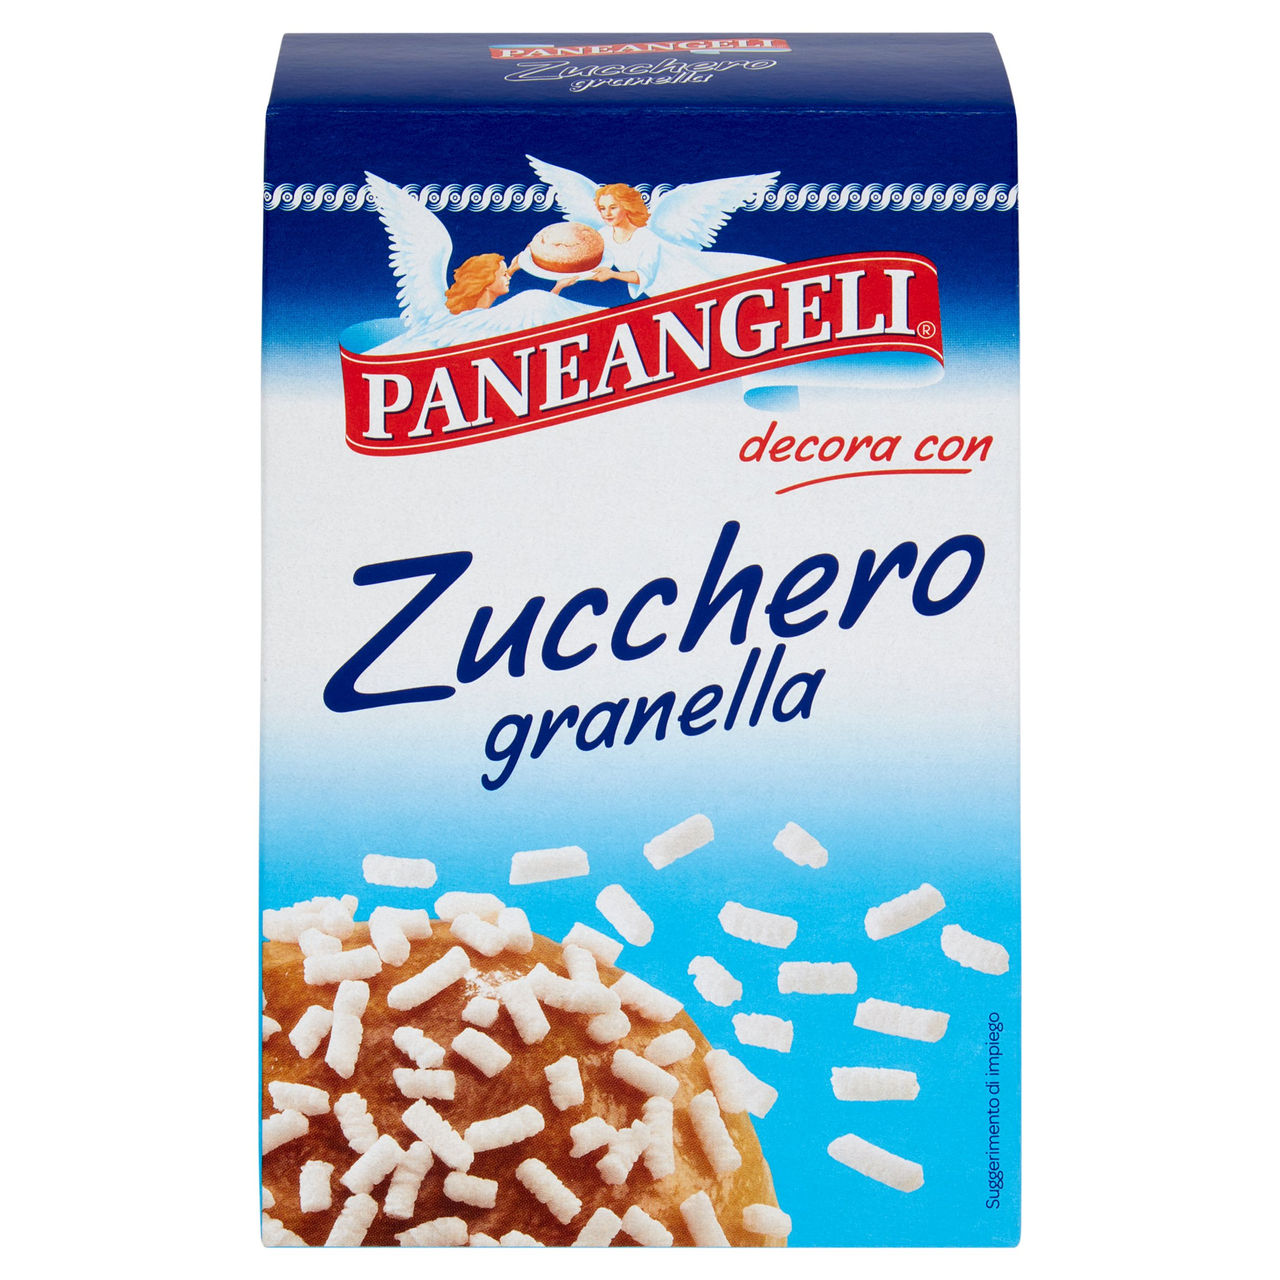 PANEANGELI decora con Zucchero granella 125 g